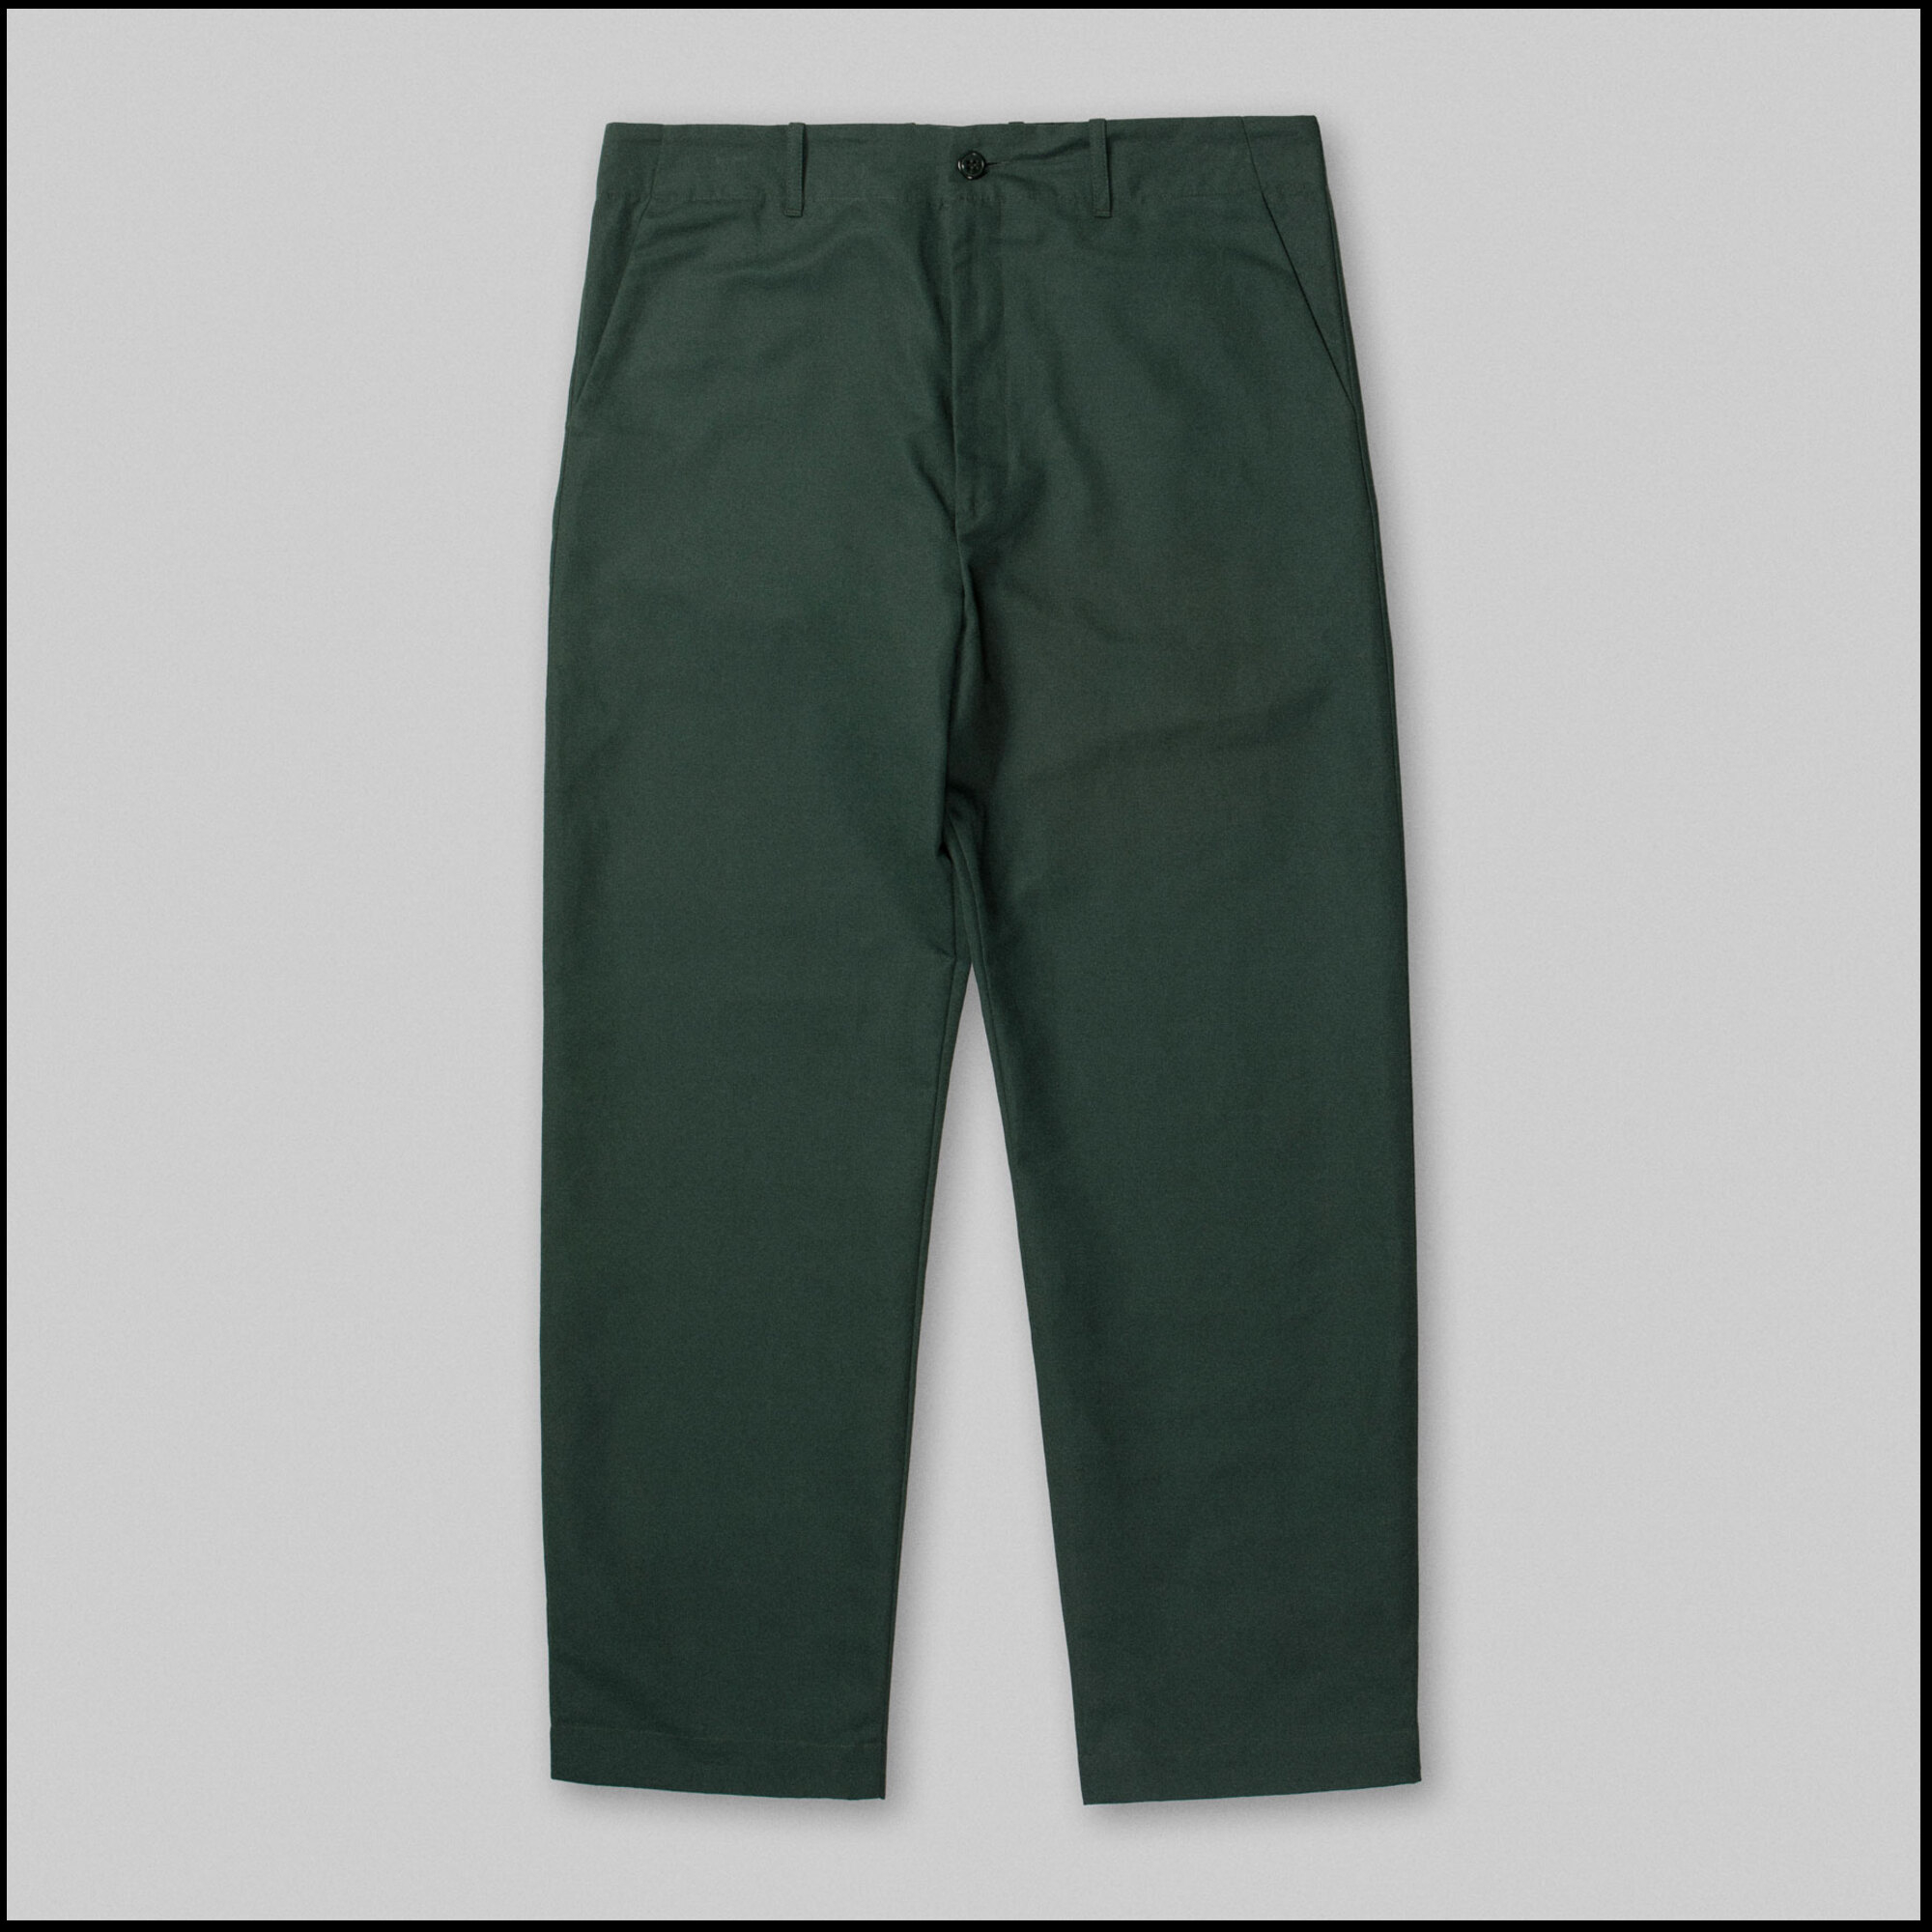 FOX Pants by Arpenteur in Green color